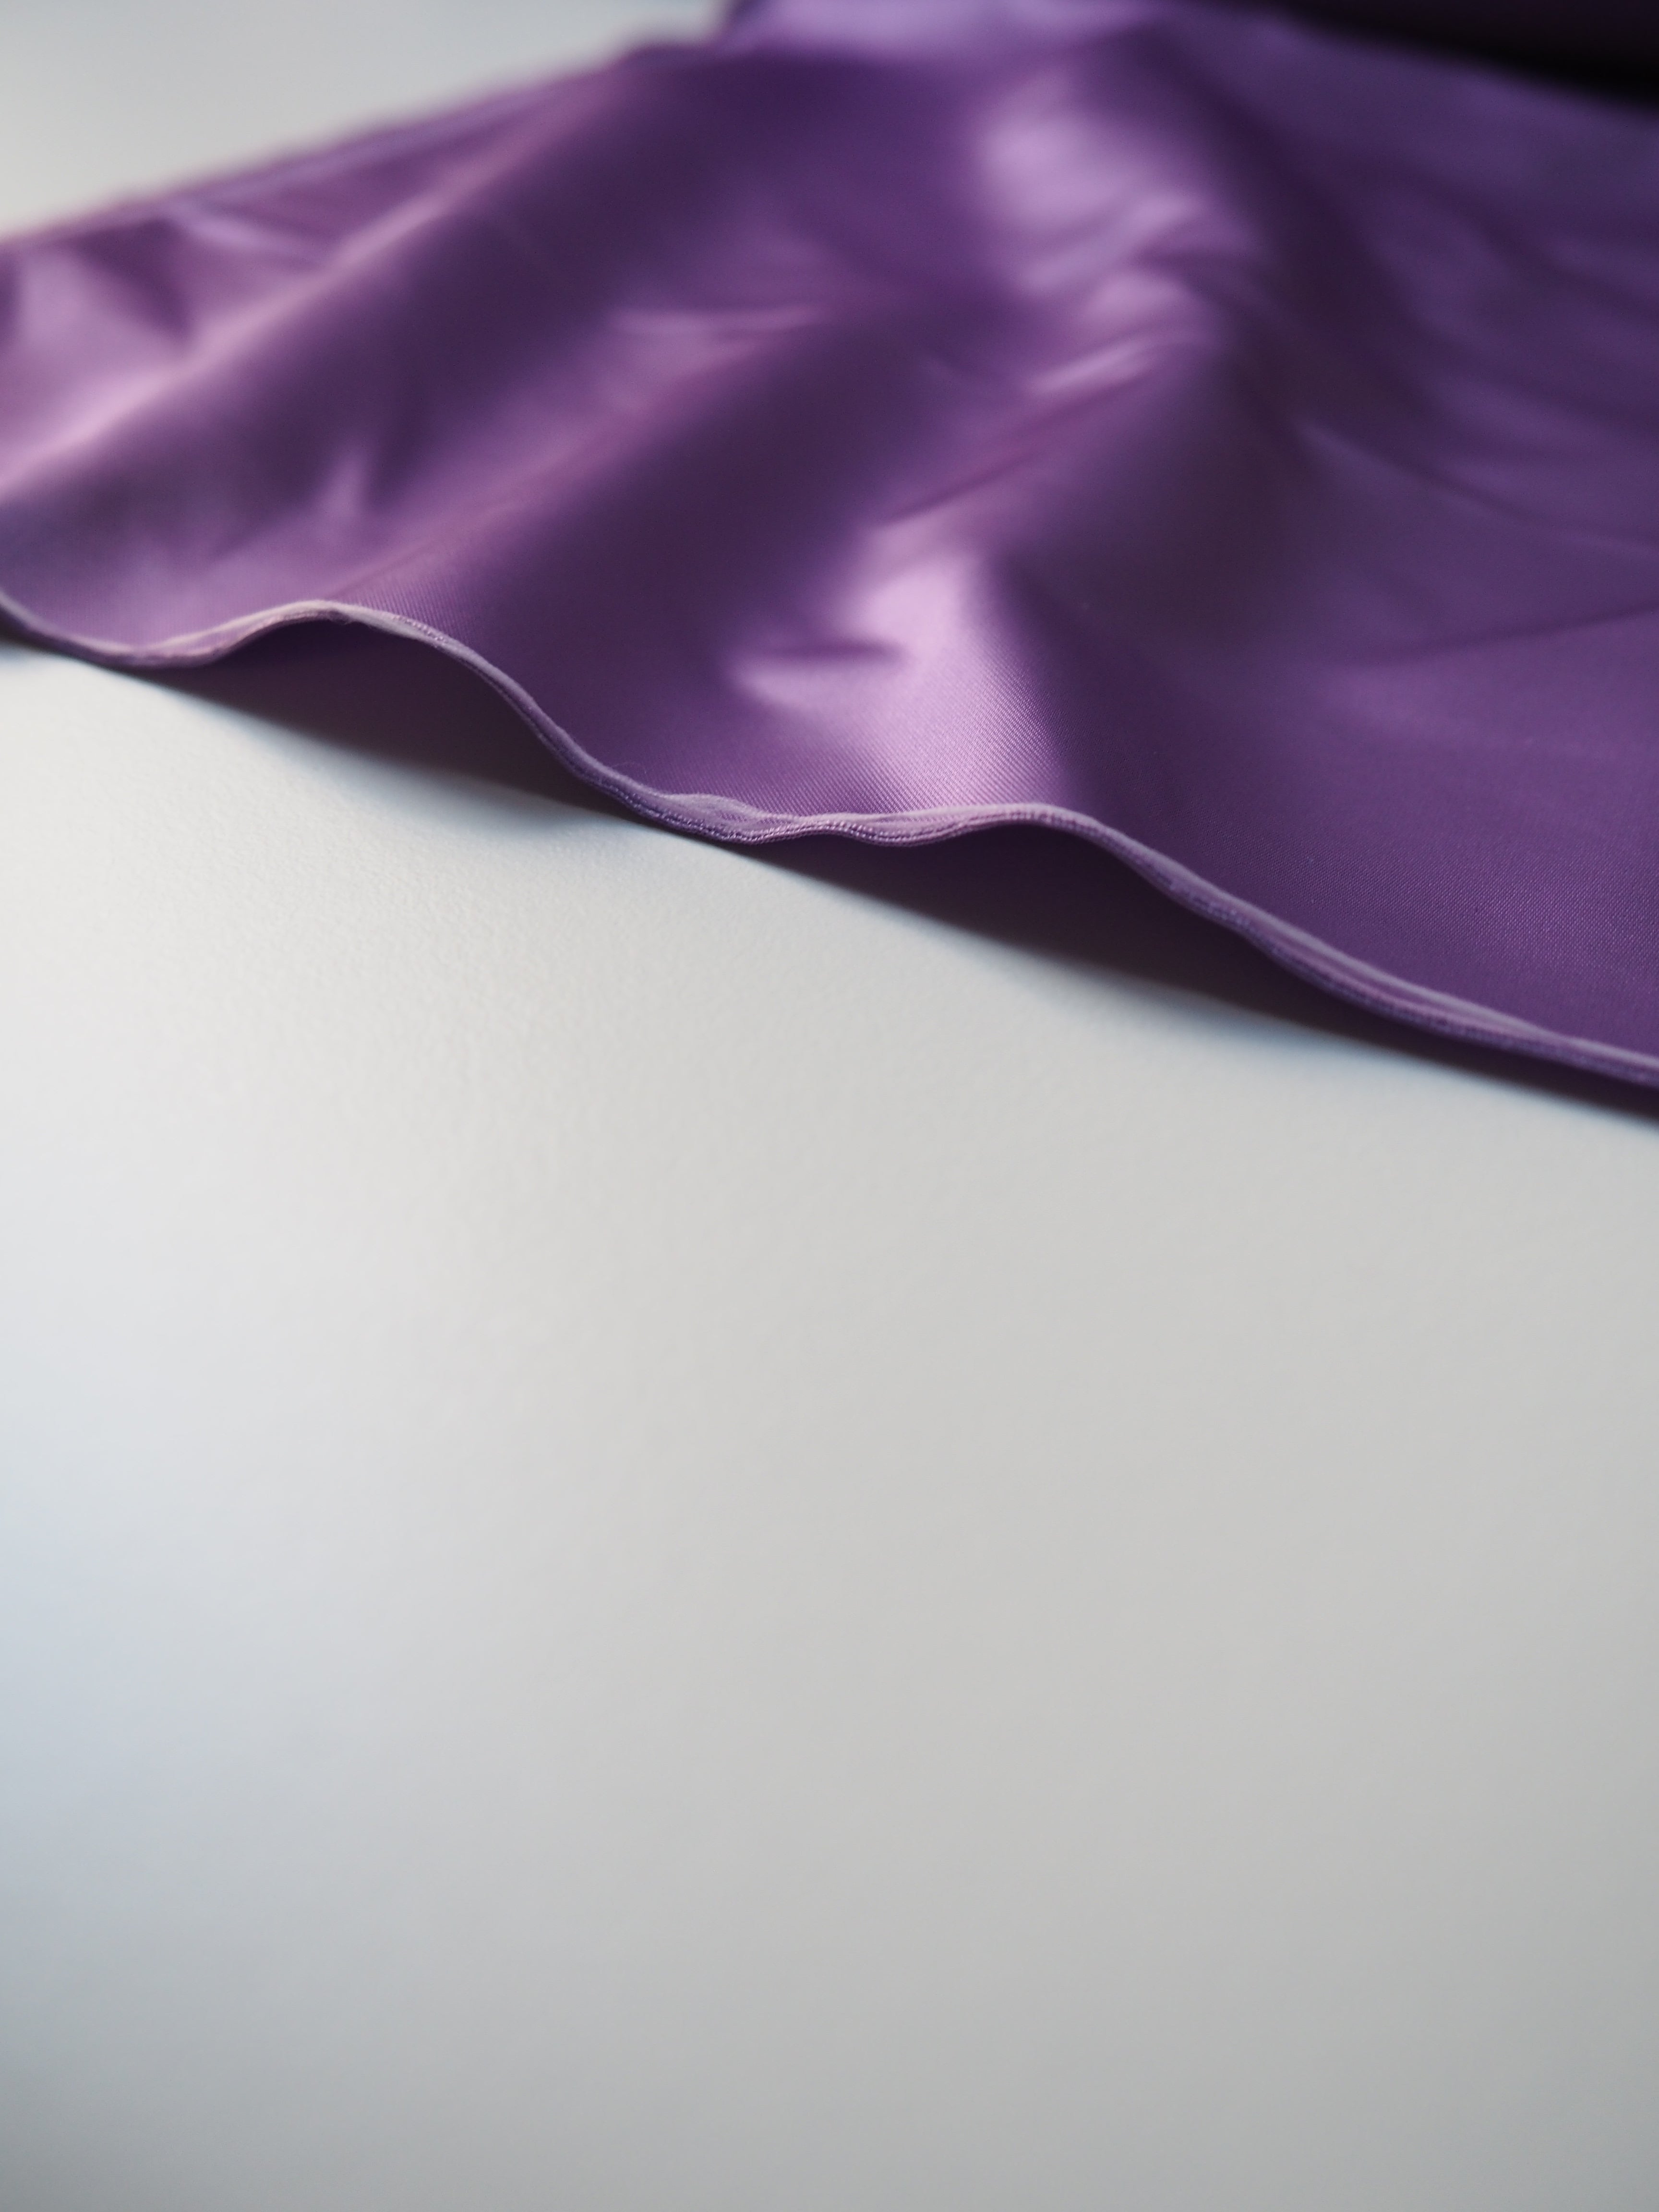 NEW Countess Christie 100% Silk Duchess Satin Fabric in Lavender Purple  53mm